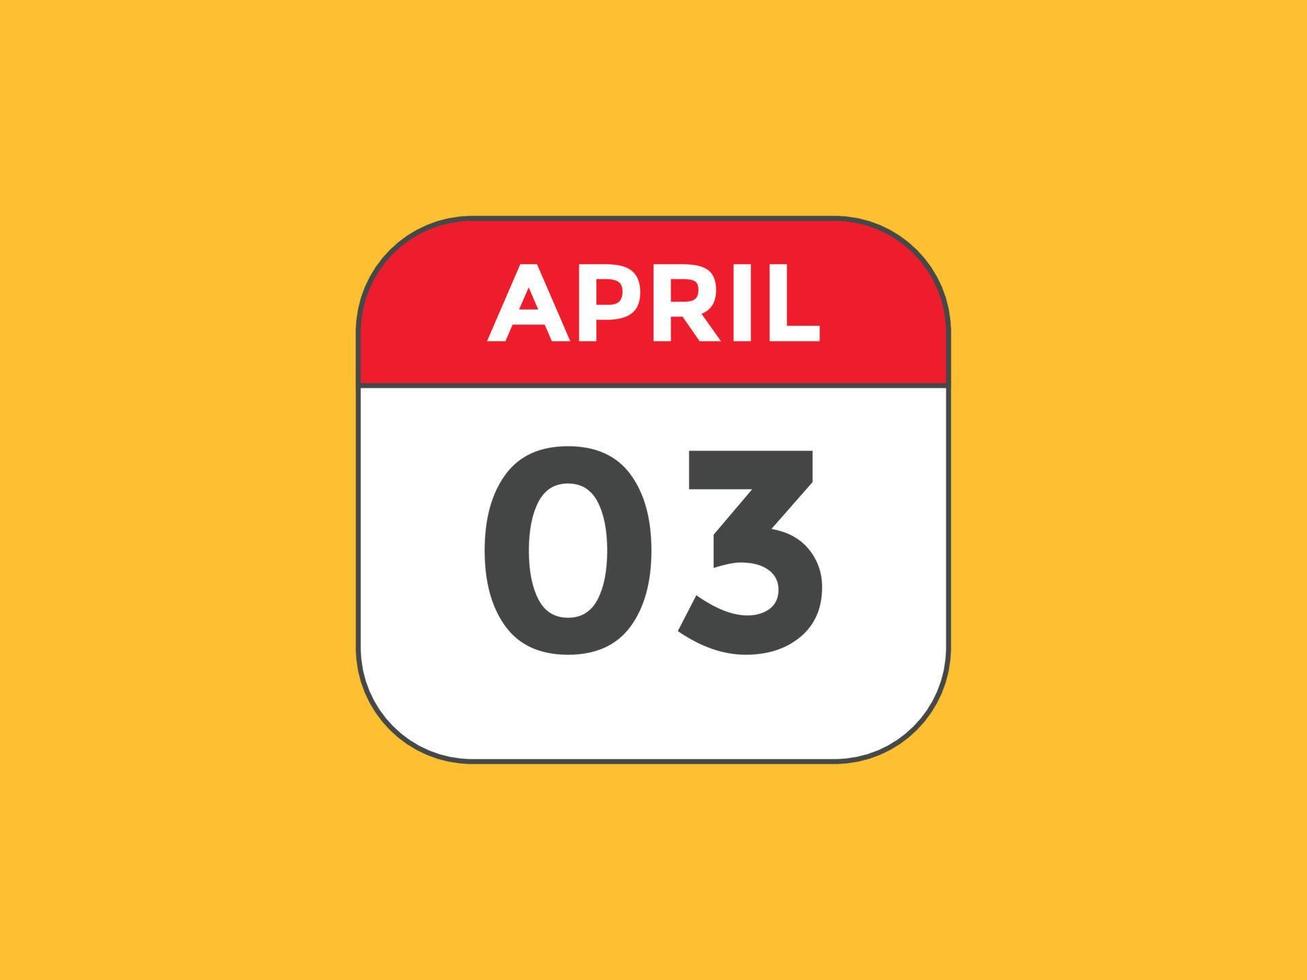 april 3 calendar reminder. 3rd april daily calendar icon template. Calendar 3rd april icon Design template. Vector illustration